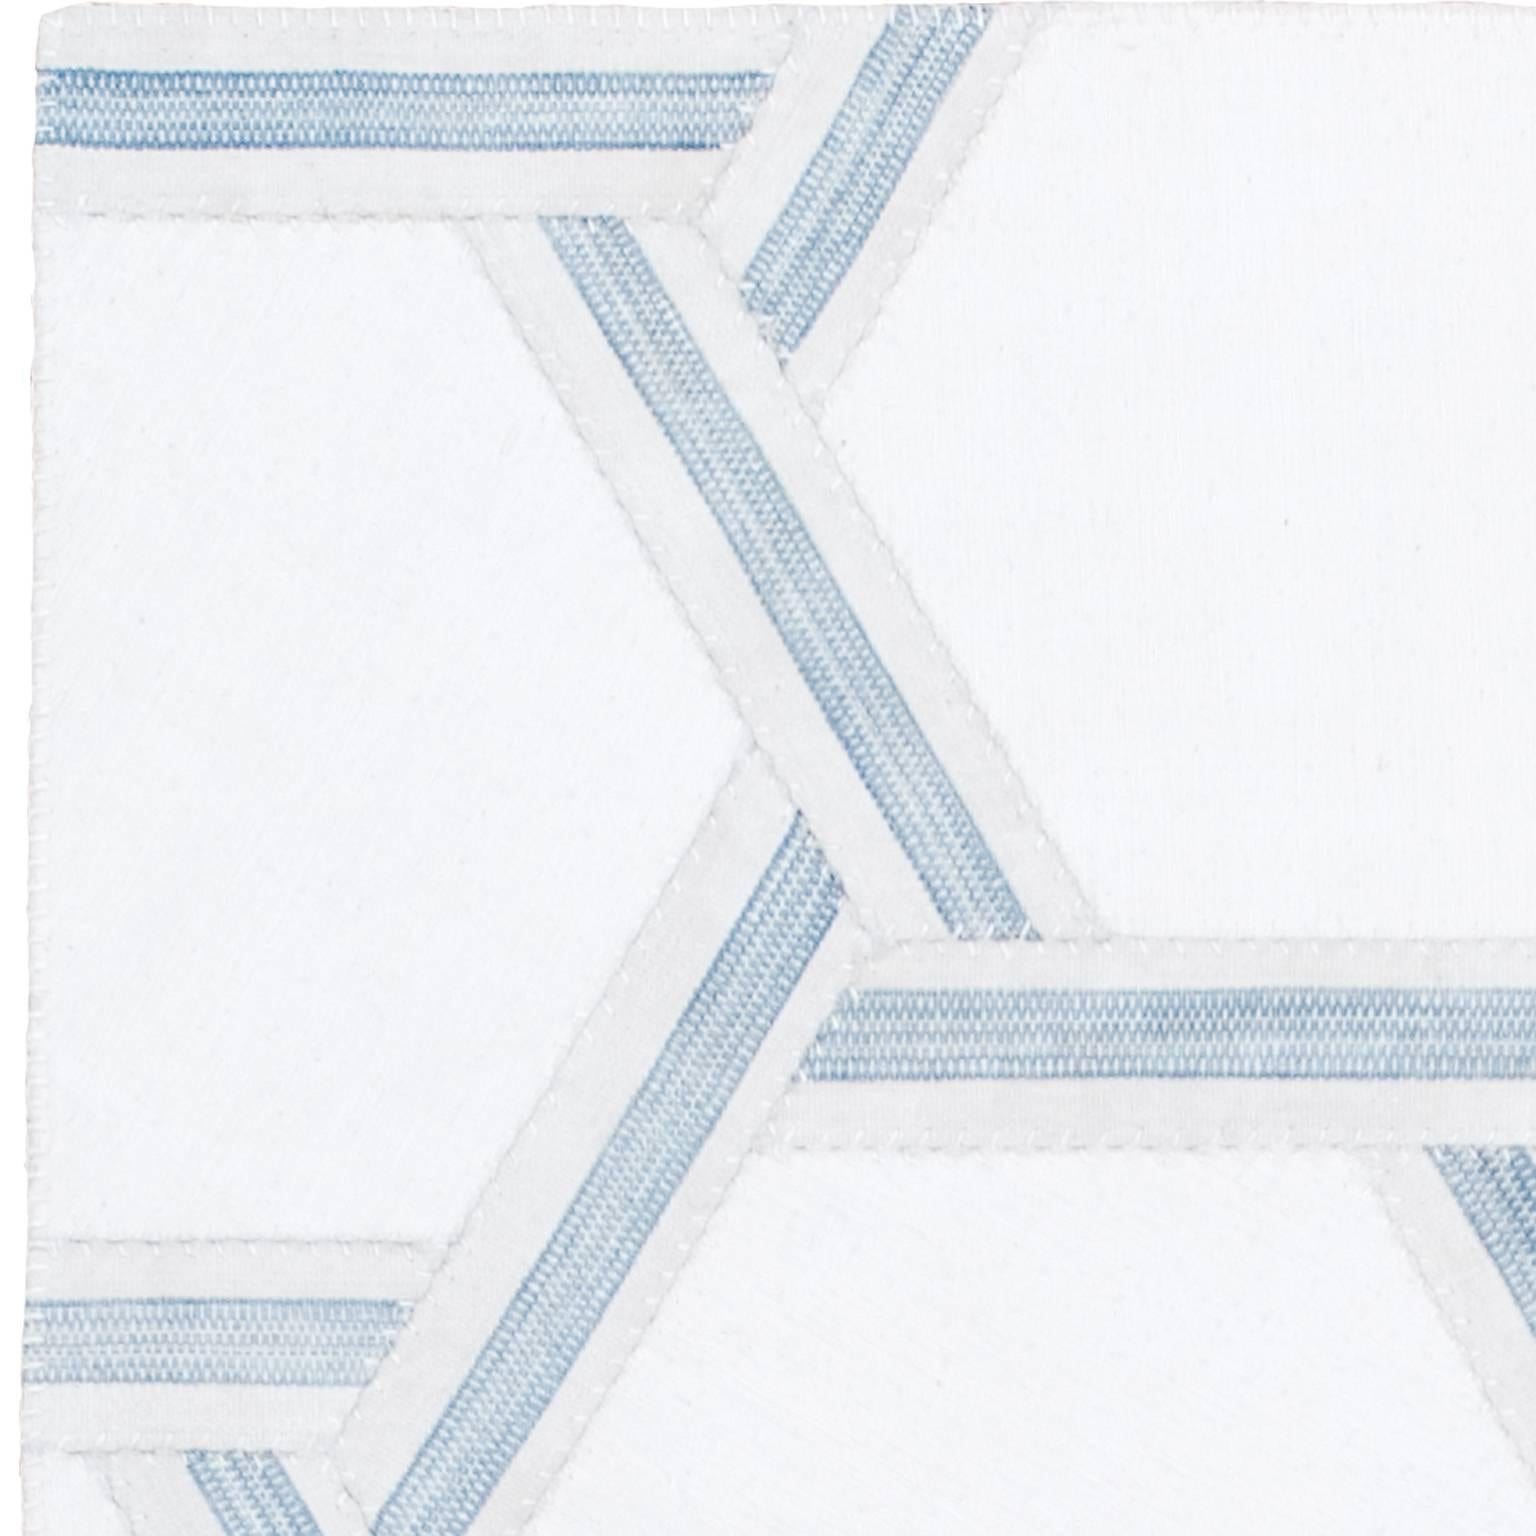 Vintage Kilim composition - Spinning star design.Turkish panels: white (100% cotton, textured), white and blue (linen & cotton)